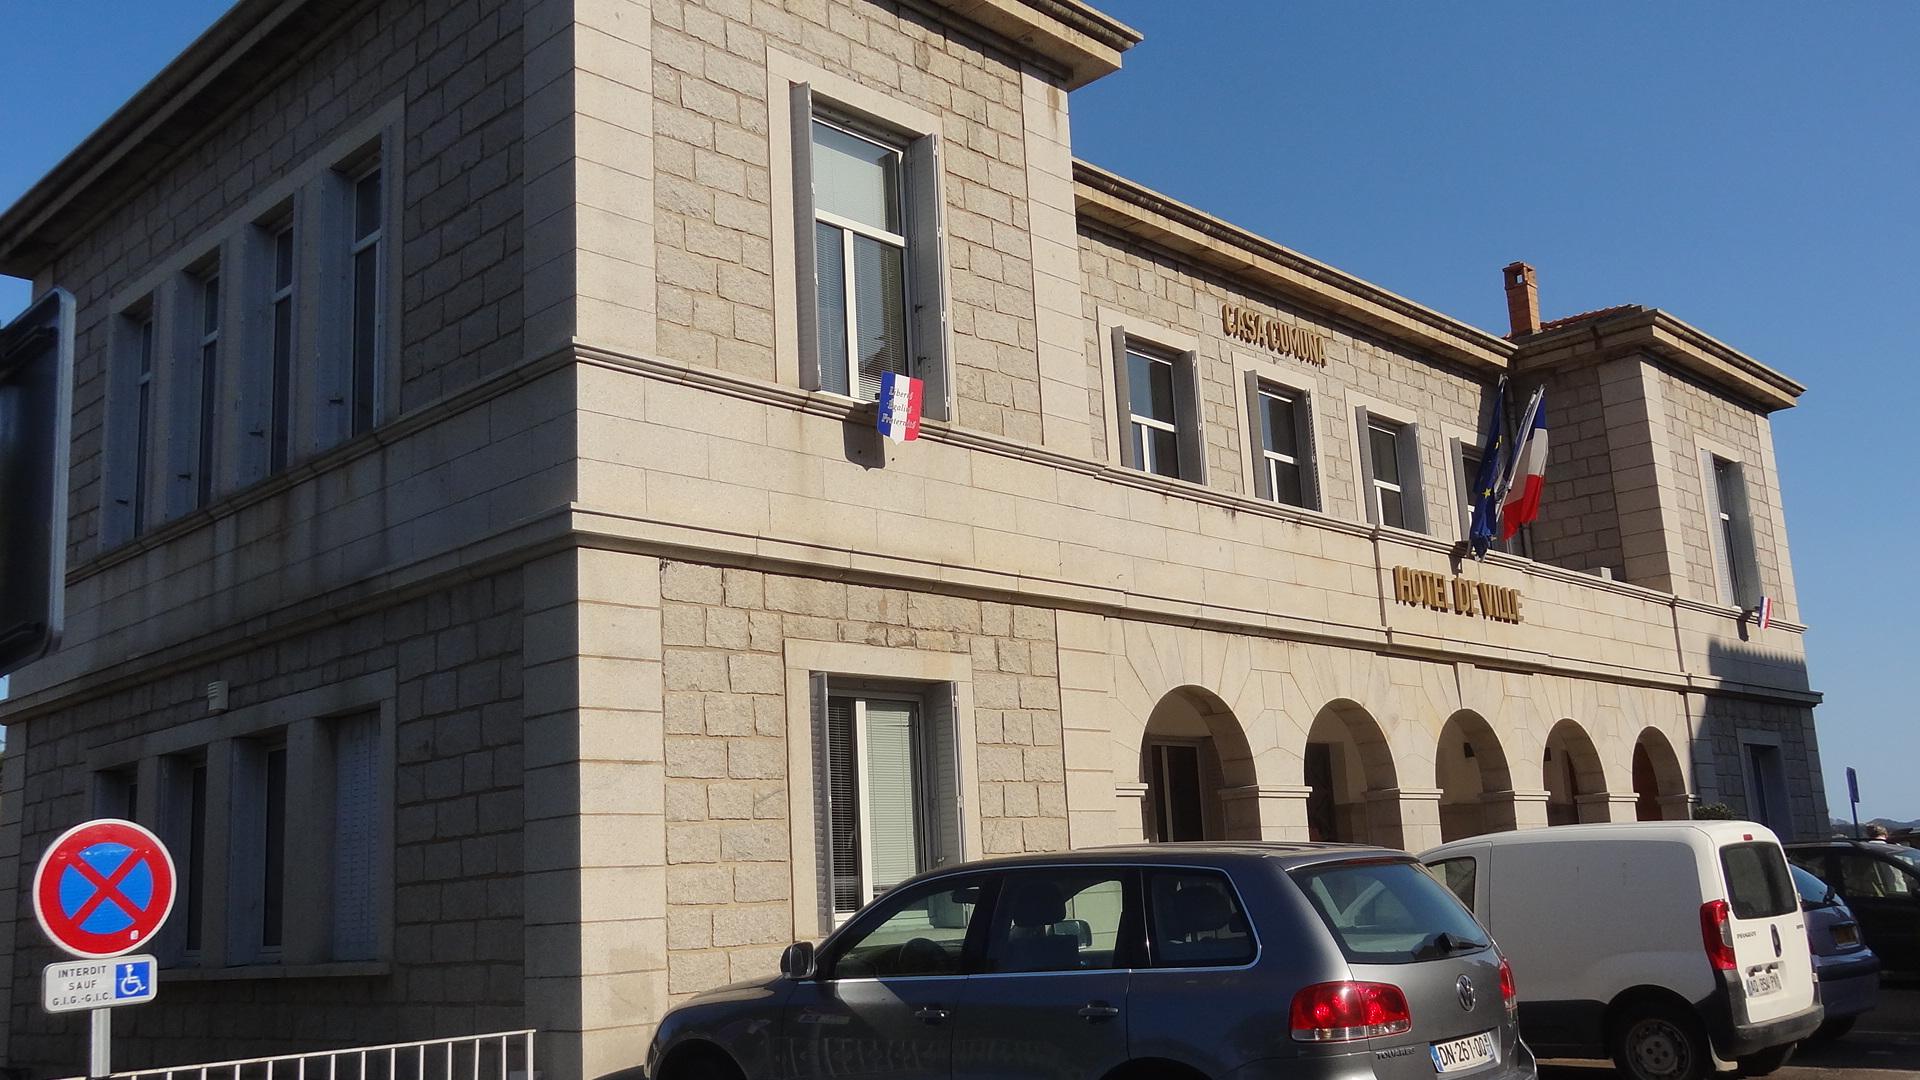 Porto-Vecchio : un conseil municipal le 11 Mars. Santini et Angelini demandent le report